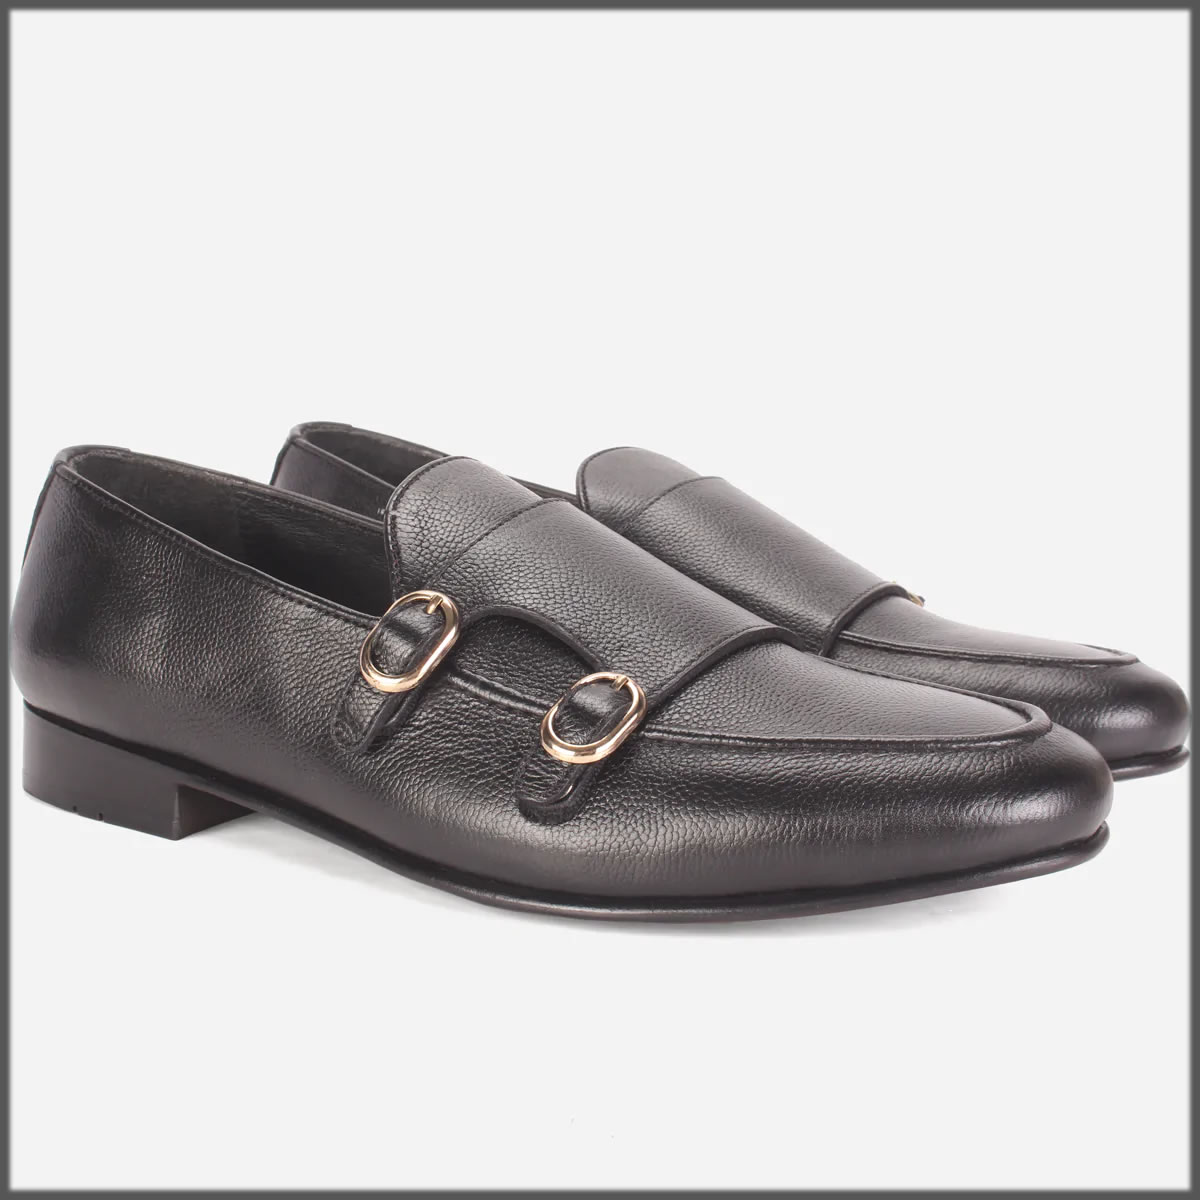 Leather Monk Straps Formal Shoes for men